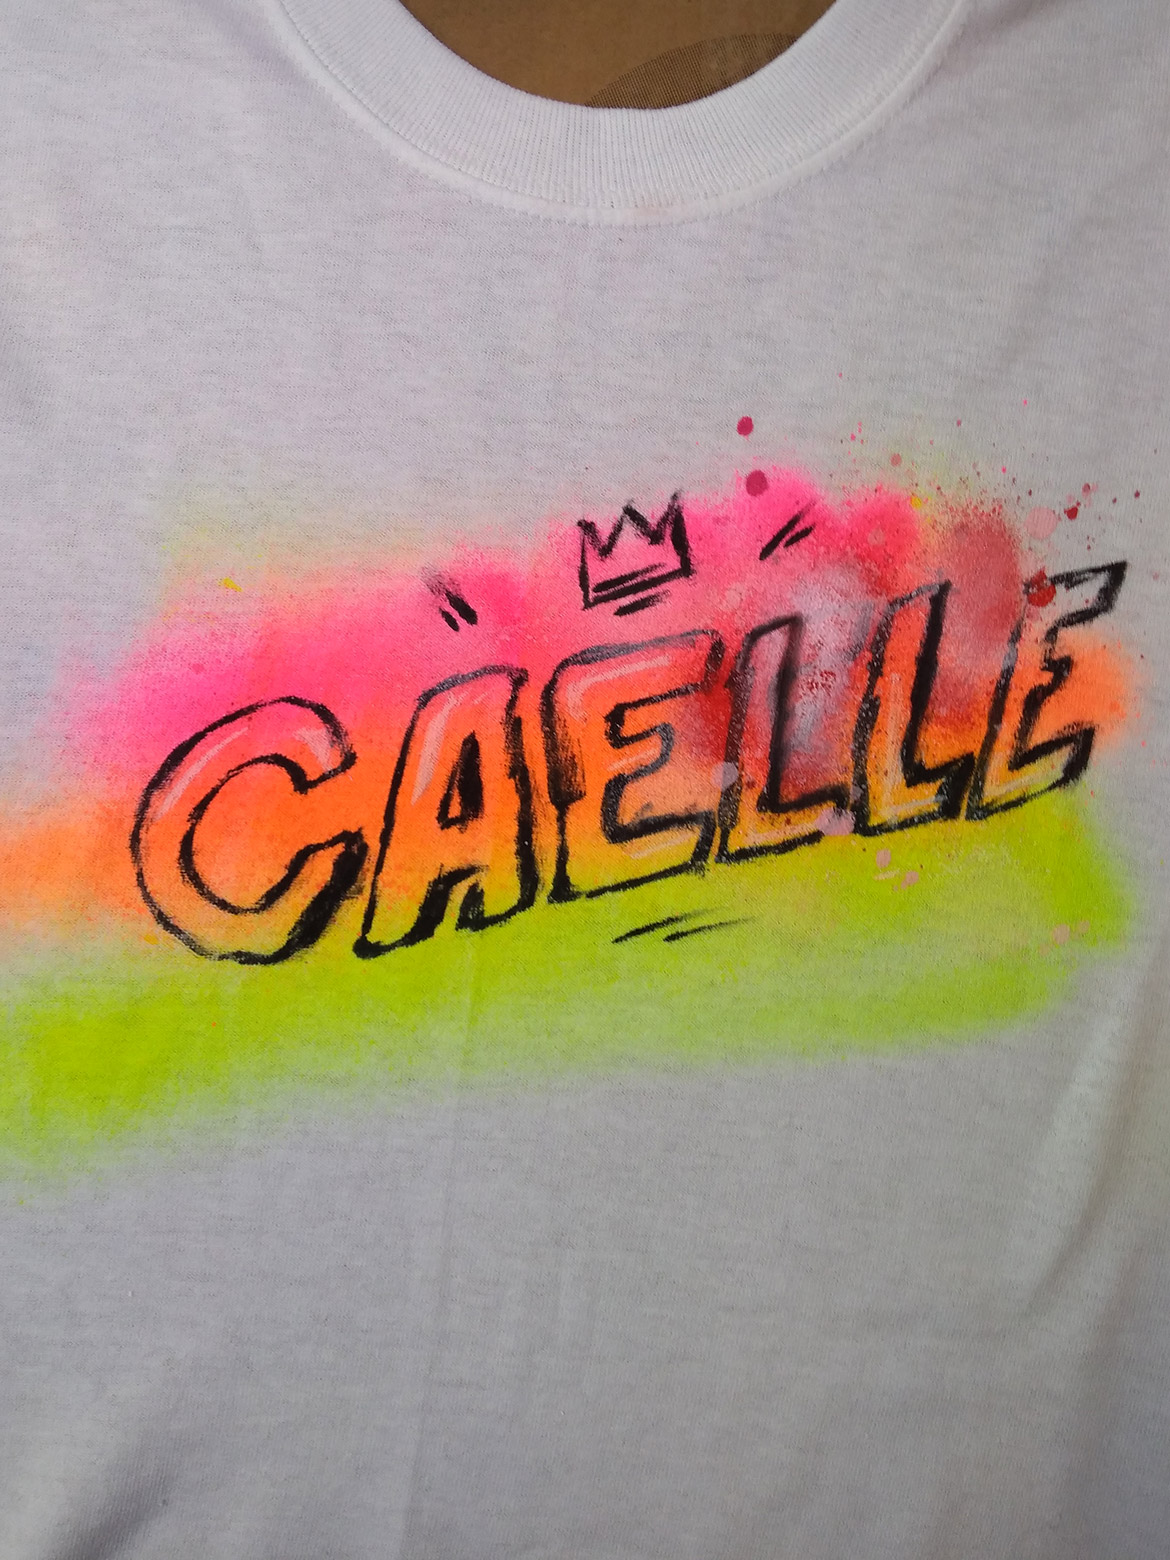 Customisation de tee shirts prénom Gaëlle graffiti pour une bar mitzvah